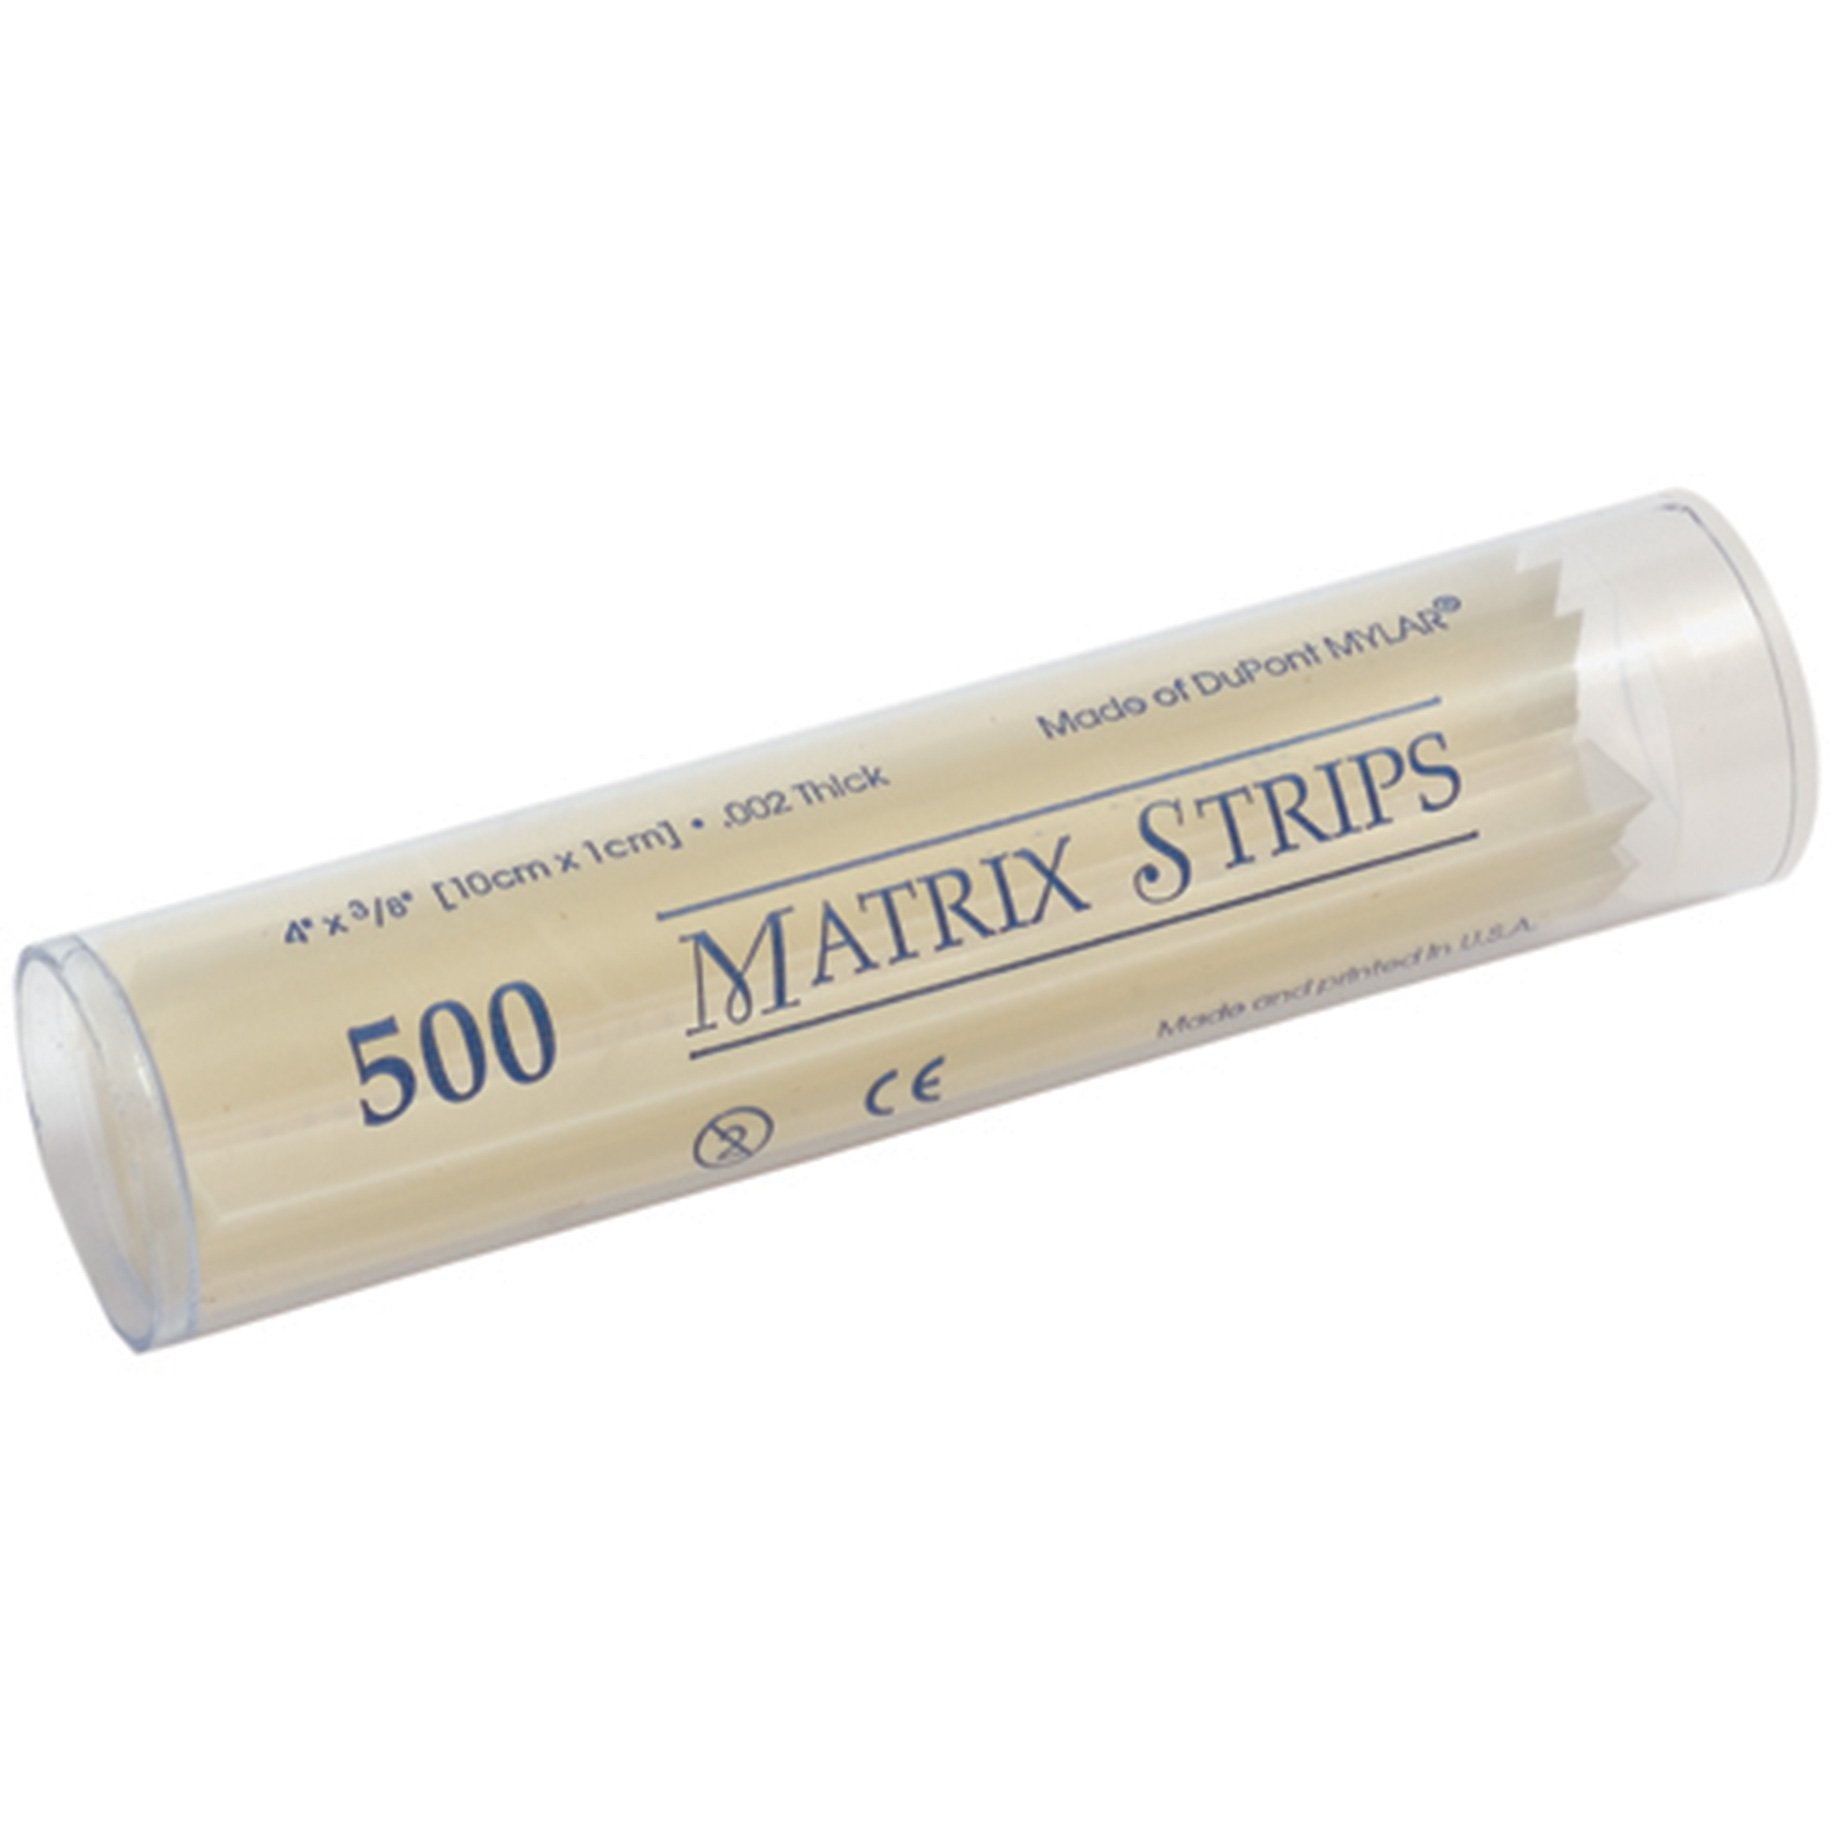 Mylar Matrix Strips 0.05mm thickness 